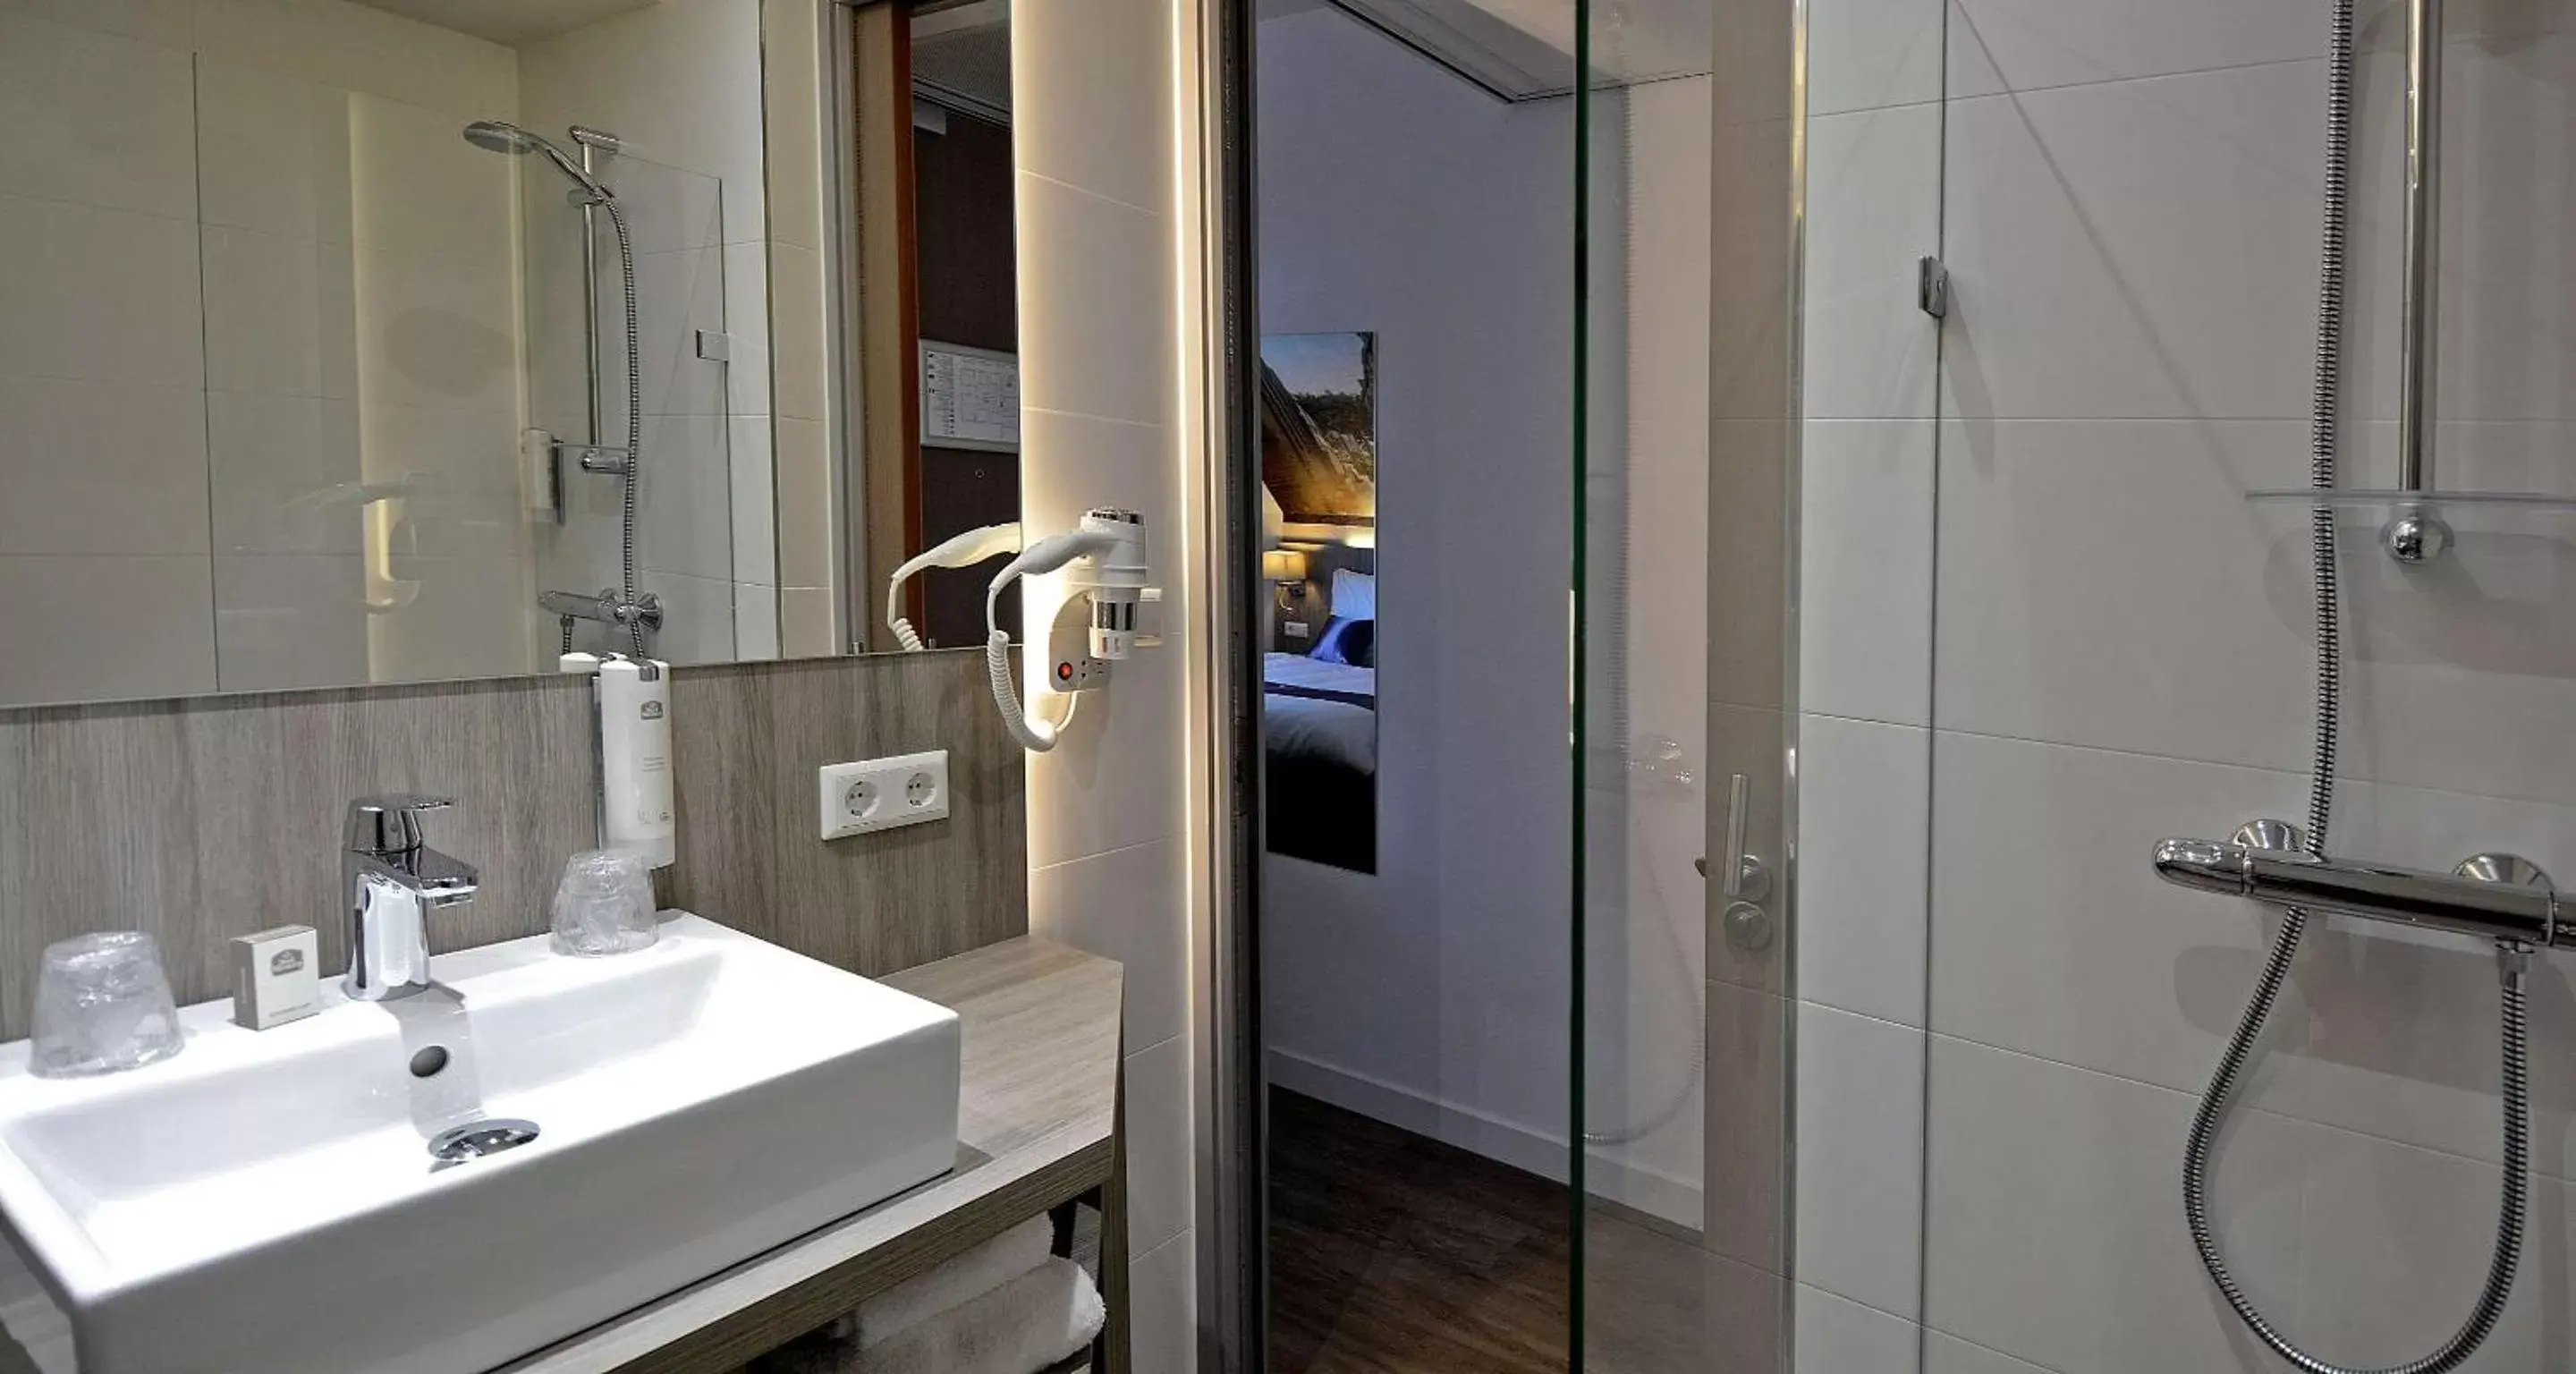 Photo of the whole room, Bathroom in Best Western City Hotel Woerden